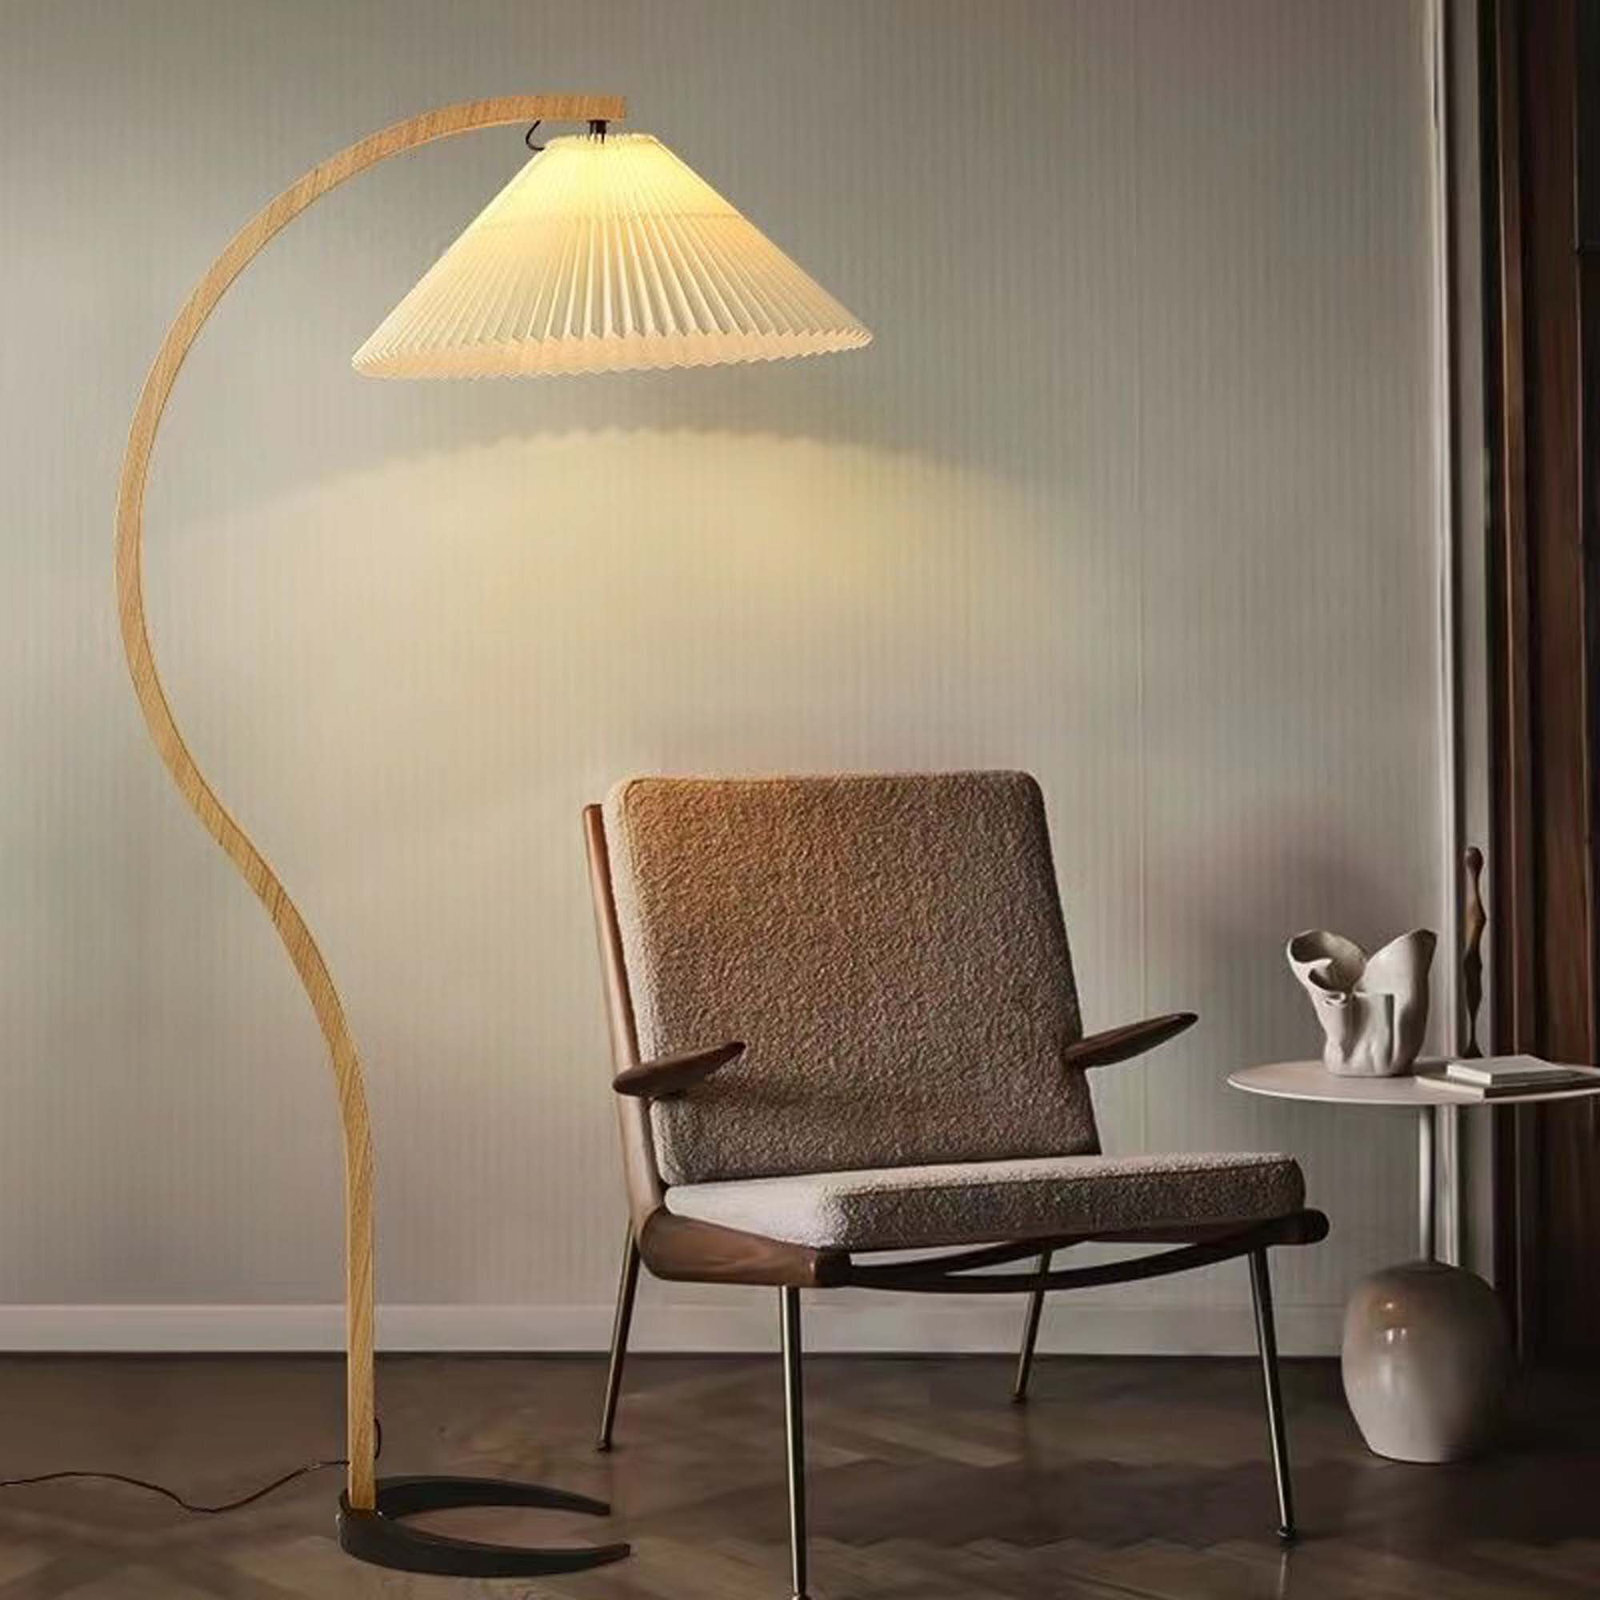 Litecraft Curved Arm Tall Floor Lamp Arc Floor Lamp White Fabric Drum Shade Standing Light 